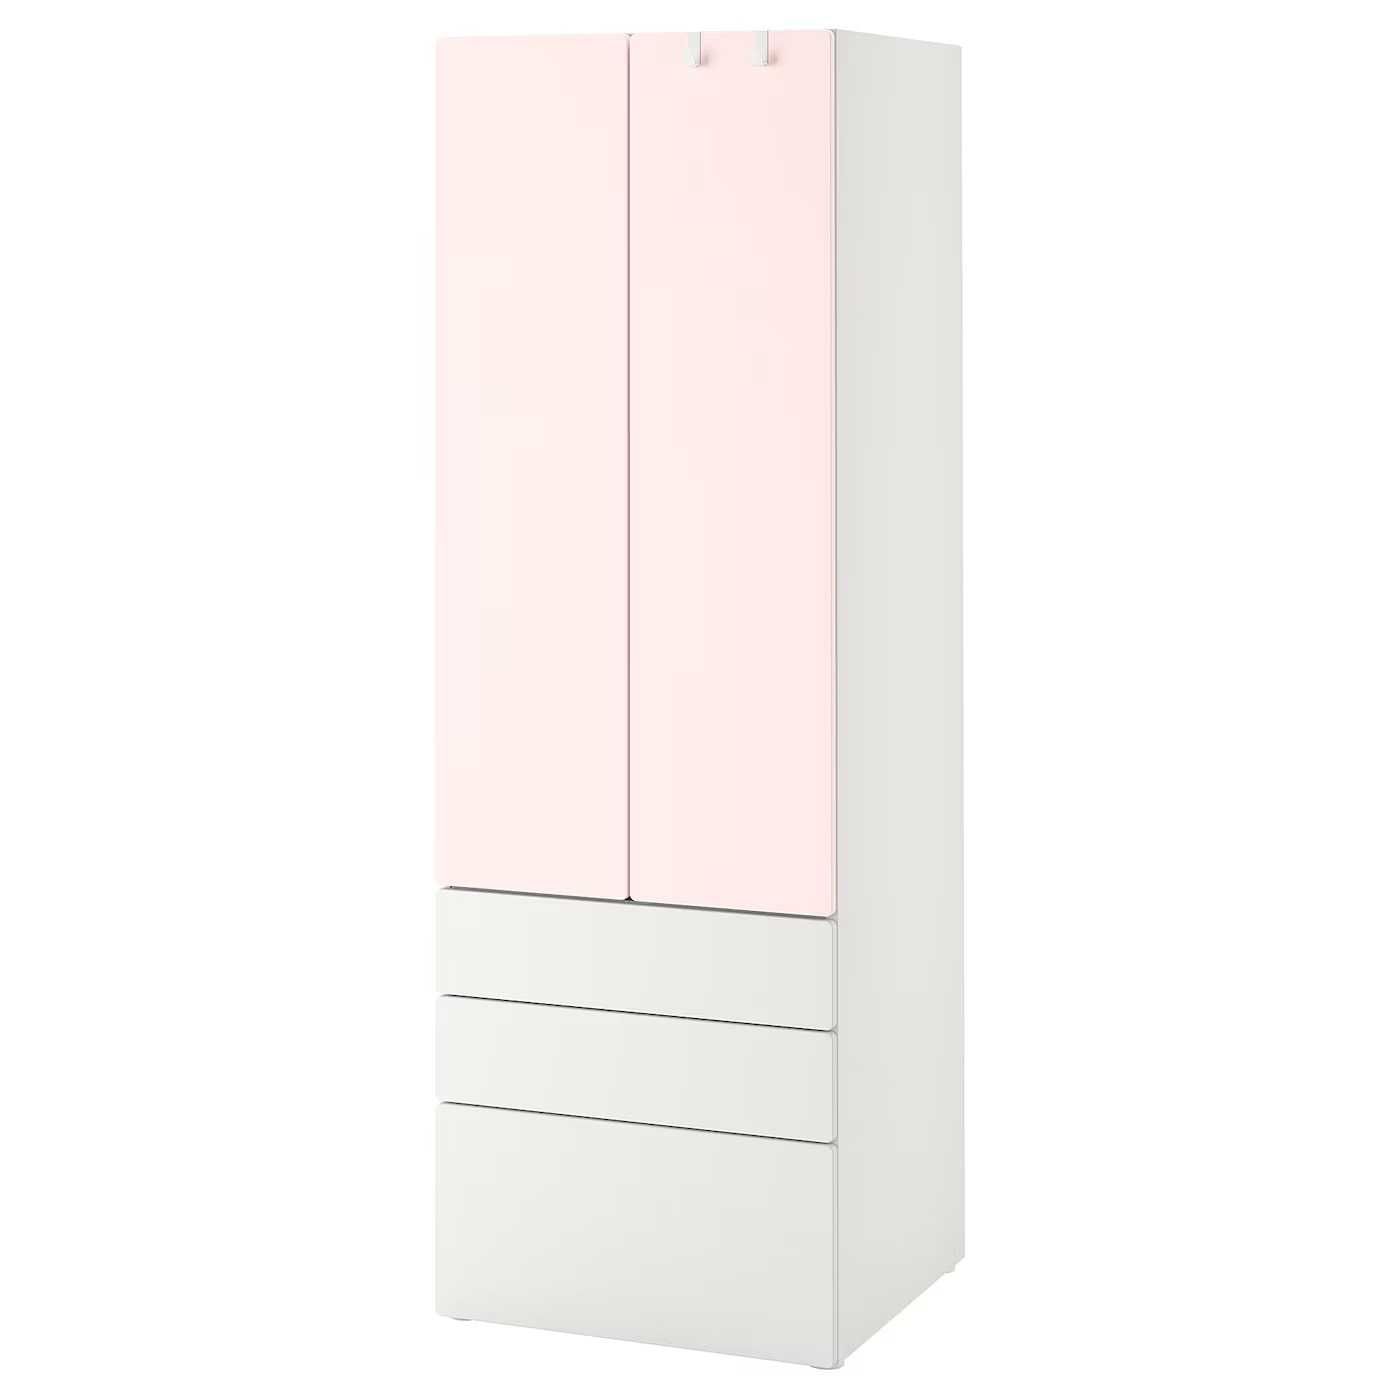 Dulap IKEA copii 3 sertare albe, 2 usi roz cu manere albe 60x57x181 cm